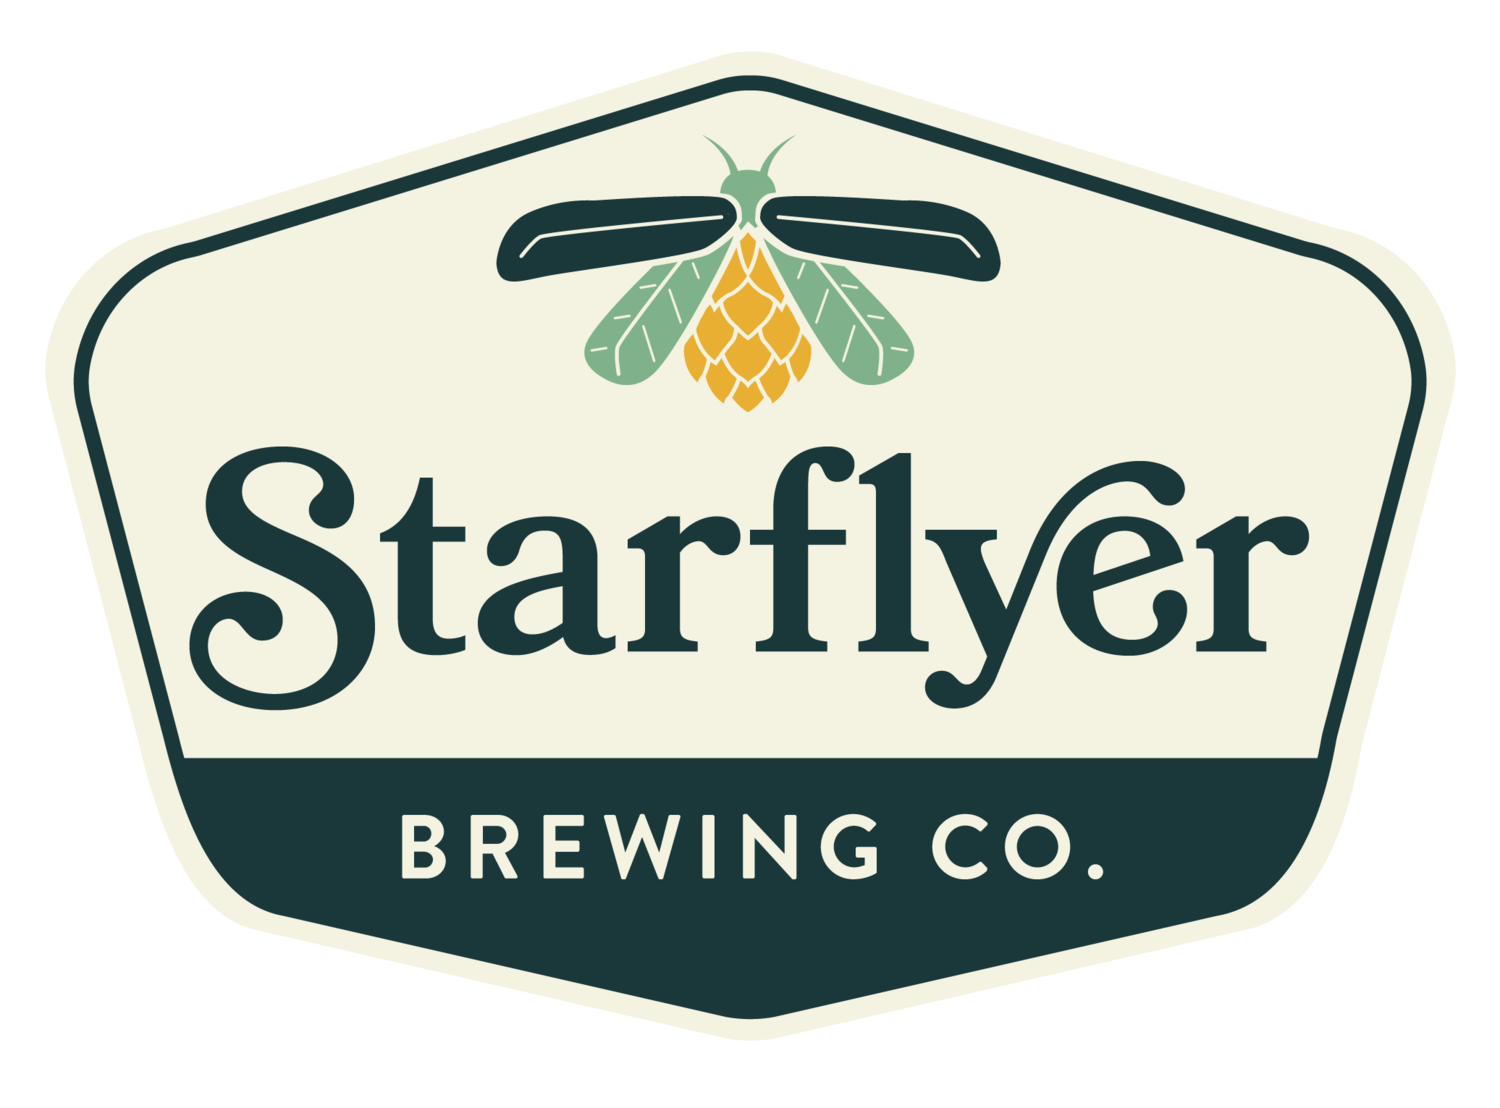 Starflyer Brewing Company